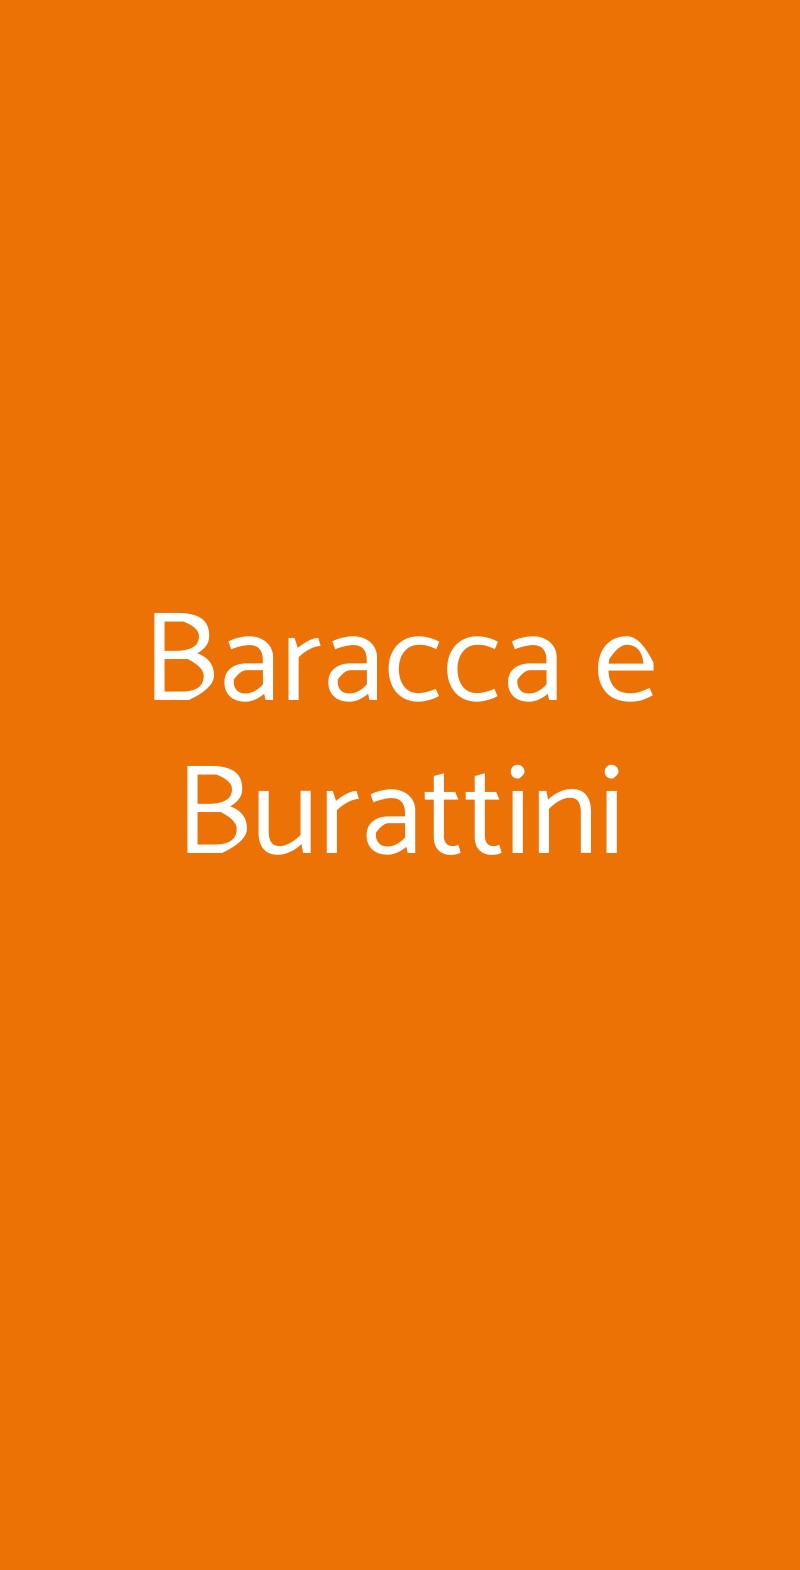 Baracca e Burattini Bologna menù 1 pagina